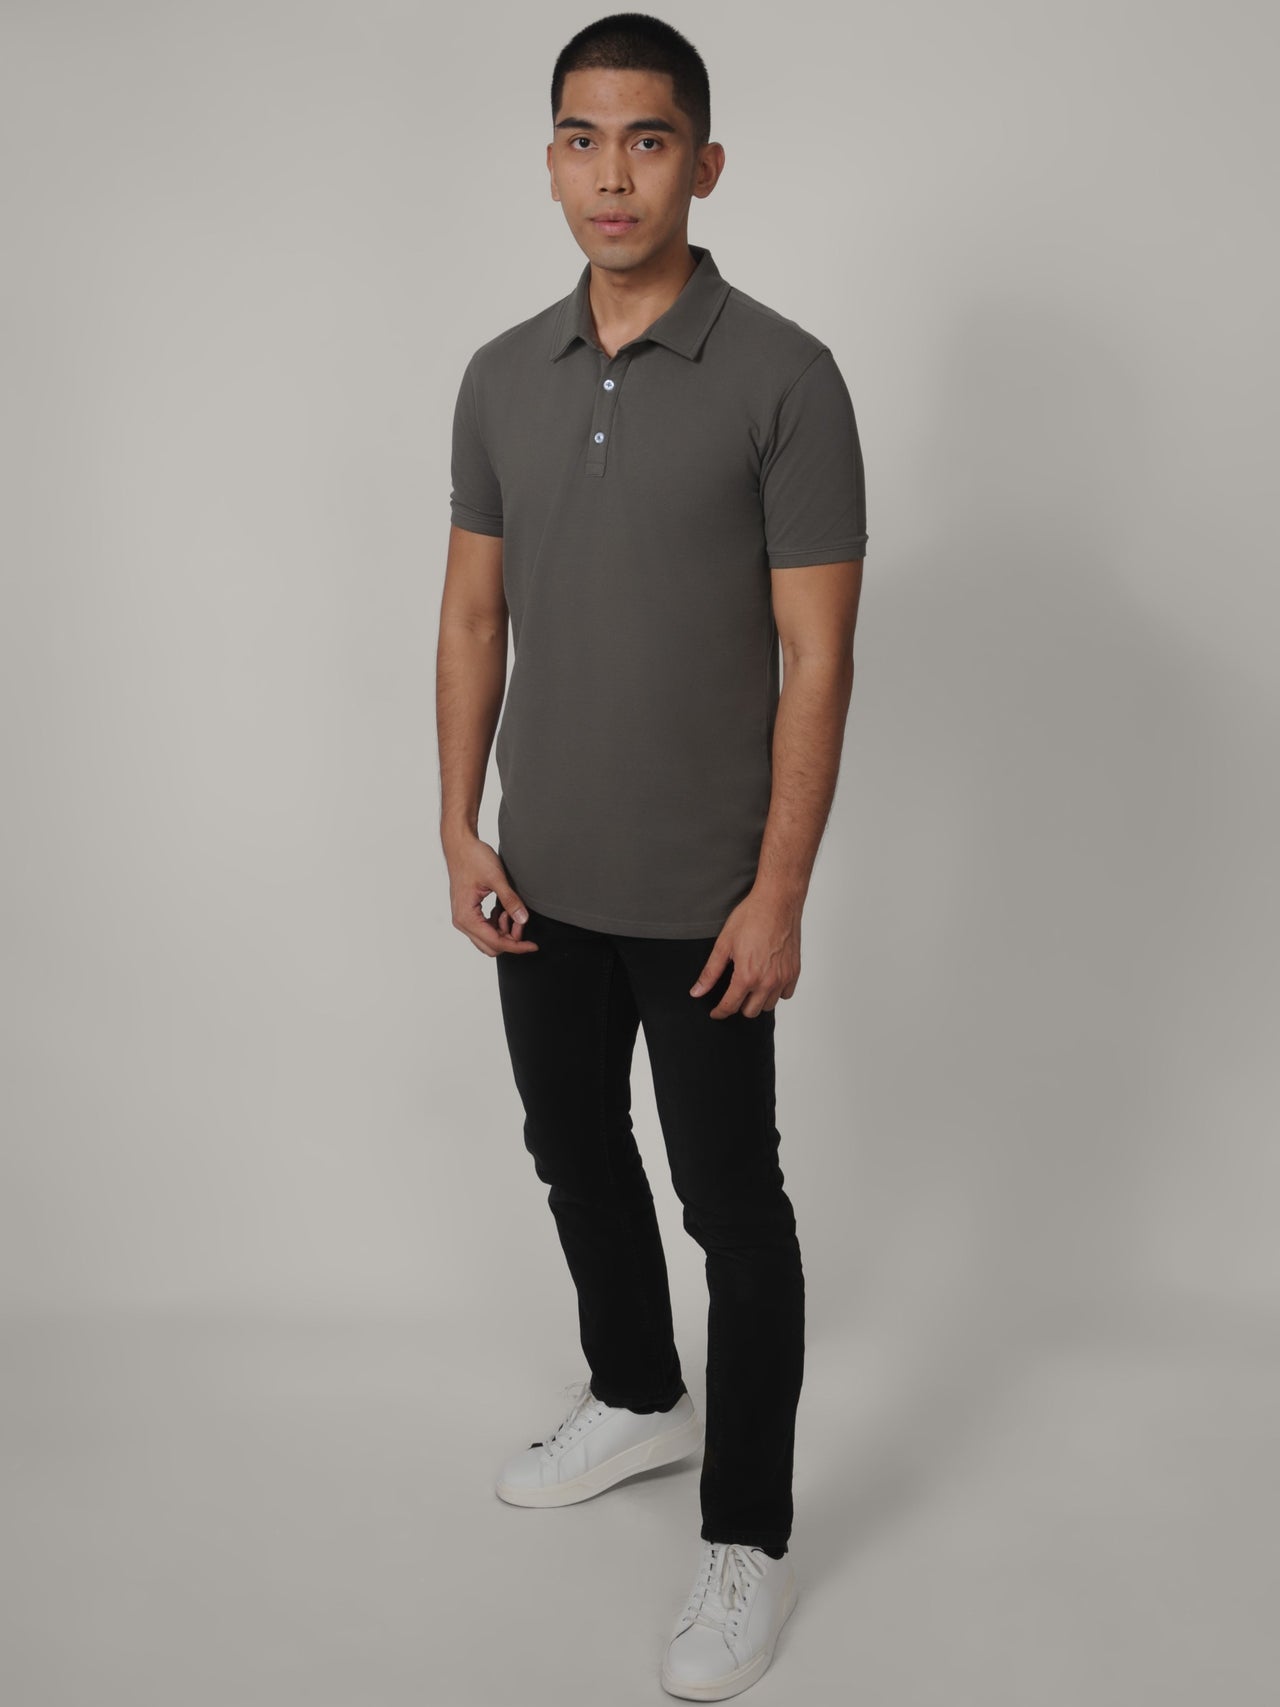 A head to toe shot of a tall skinny guy wearing a grey medium tall polo shirt.